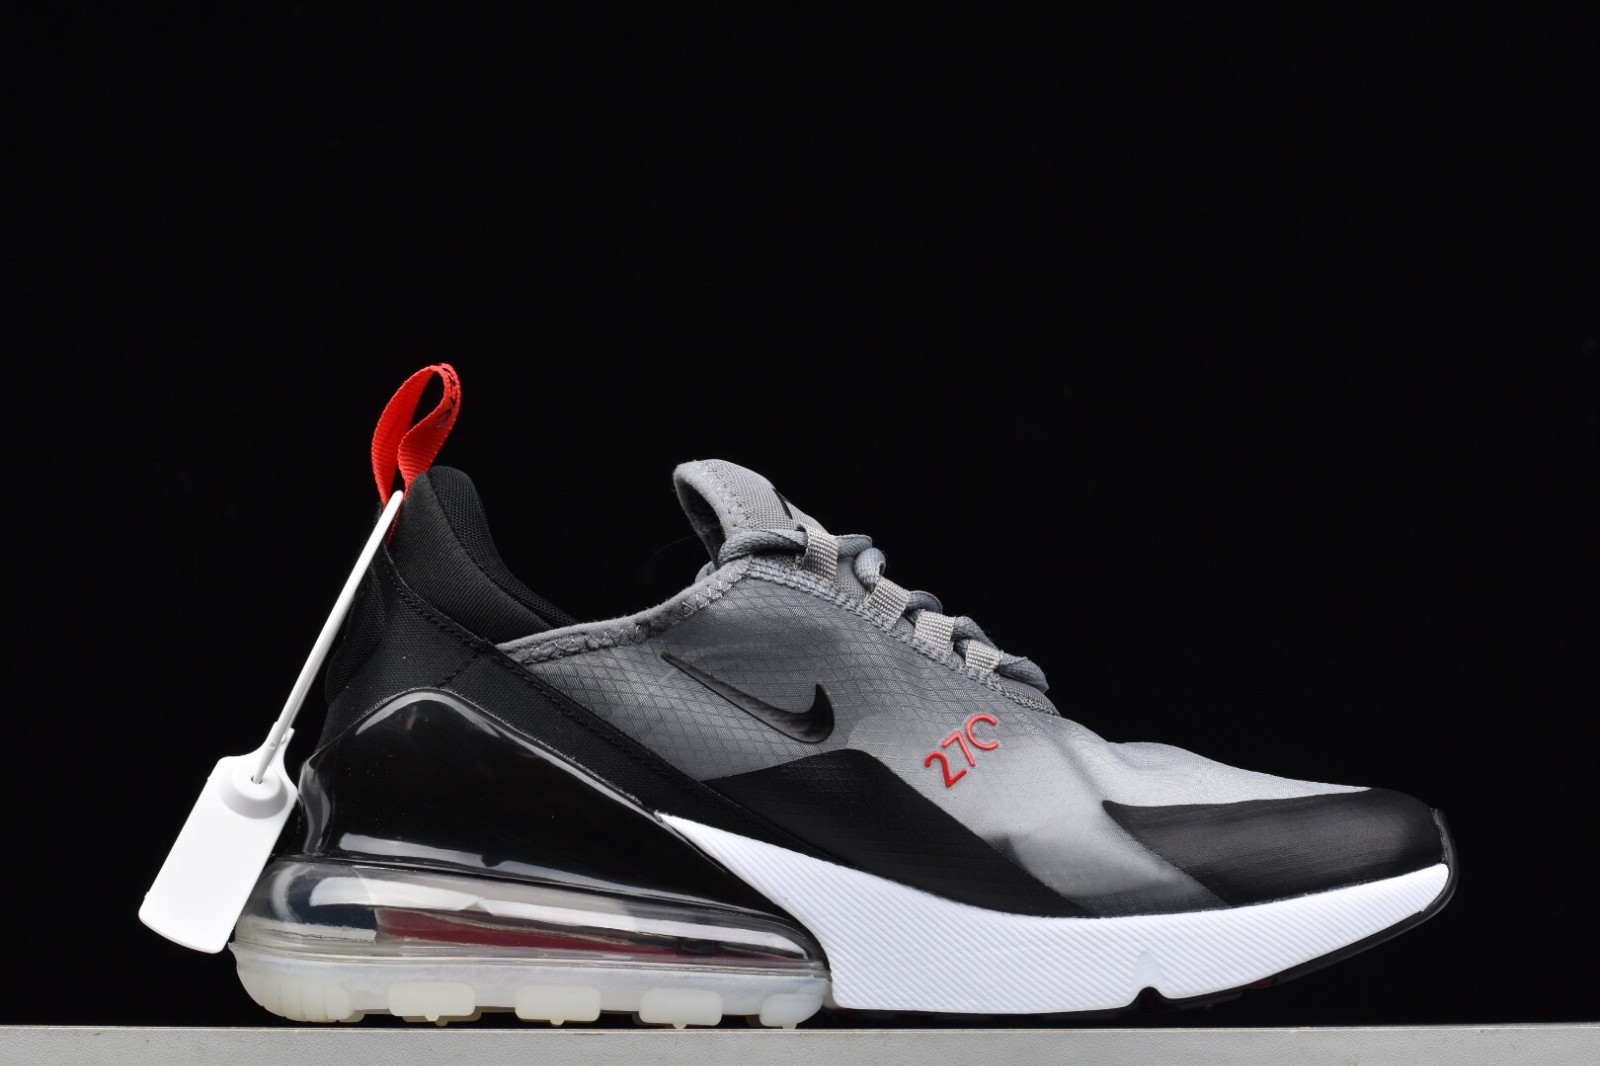 Nike Nike Air Max 90 Premium Sail Wolf Grey Black Red Running Shoes ...